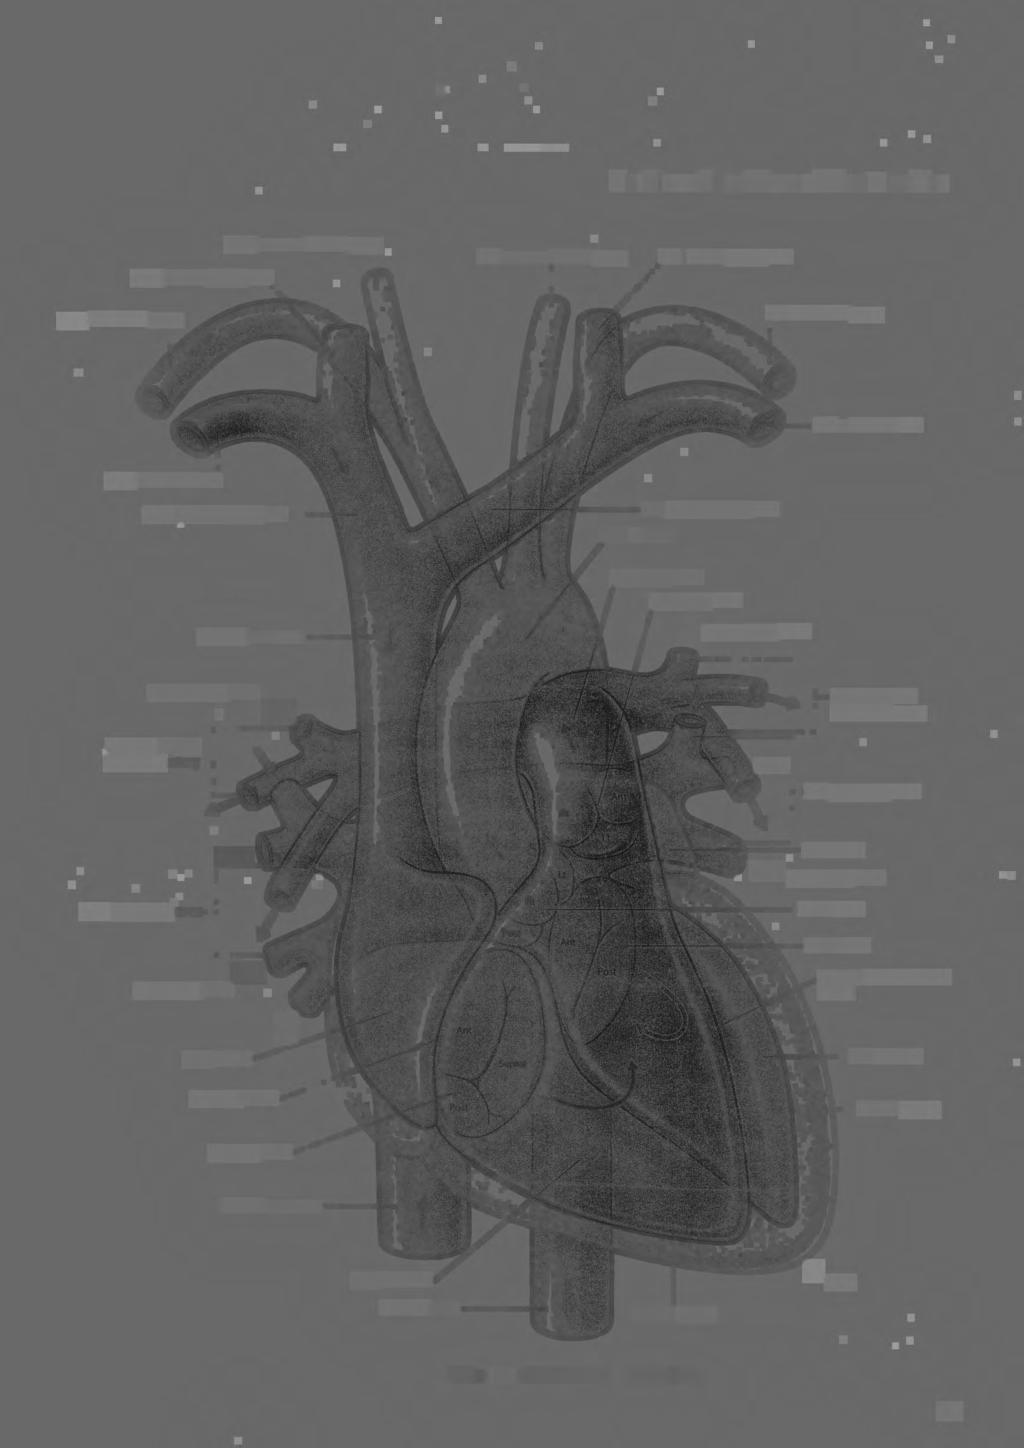 JilCff, _ Right brachiocephalic vein----' Left brachiocephalic vein Arch of aorta Pulmonary valve t